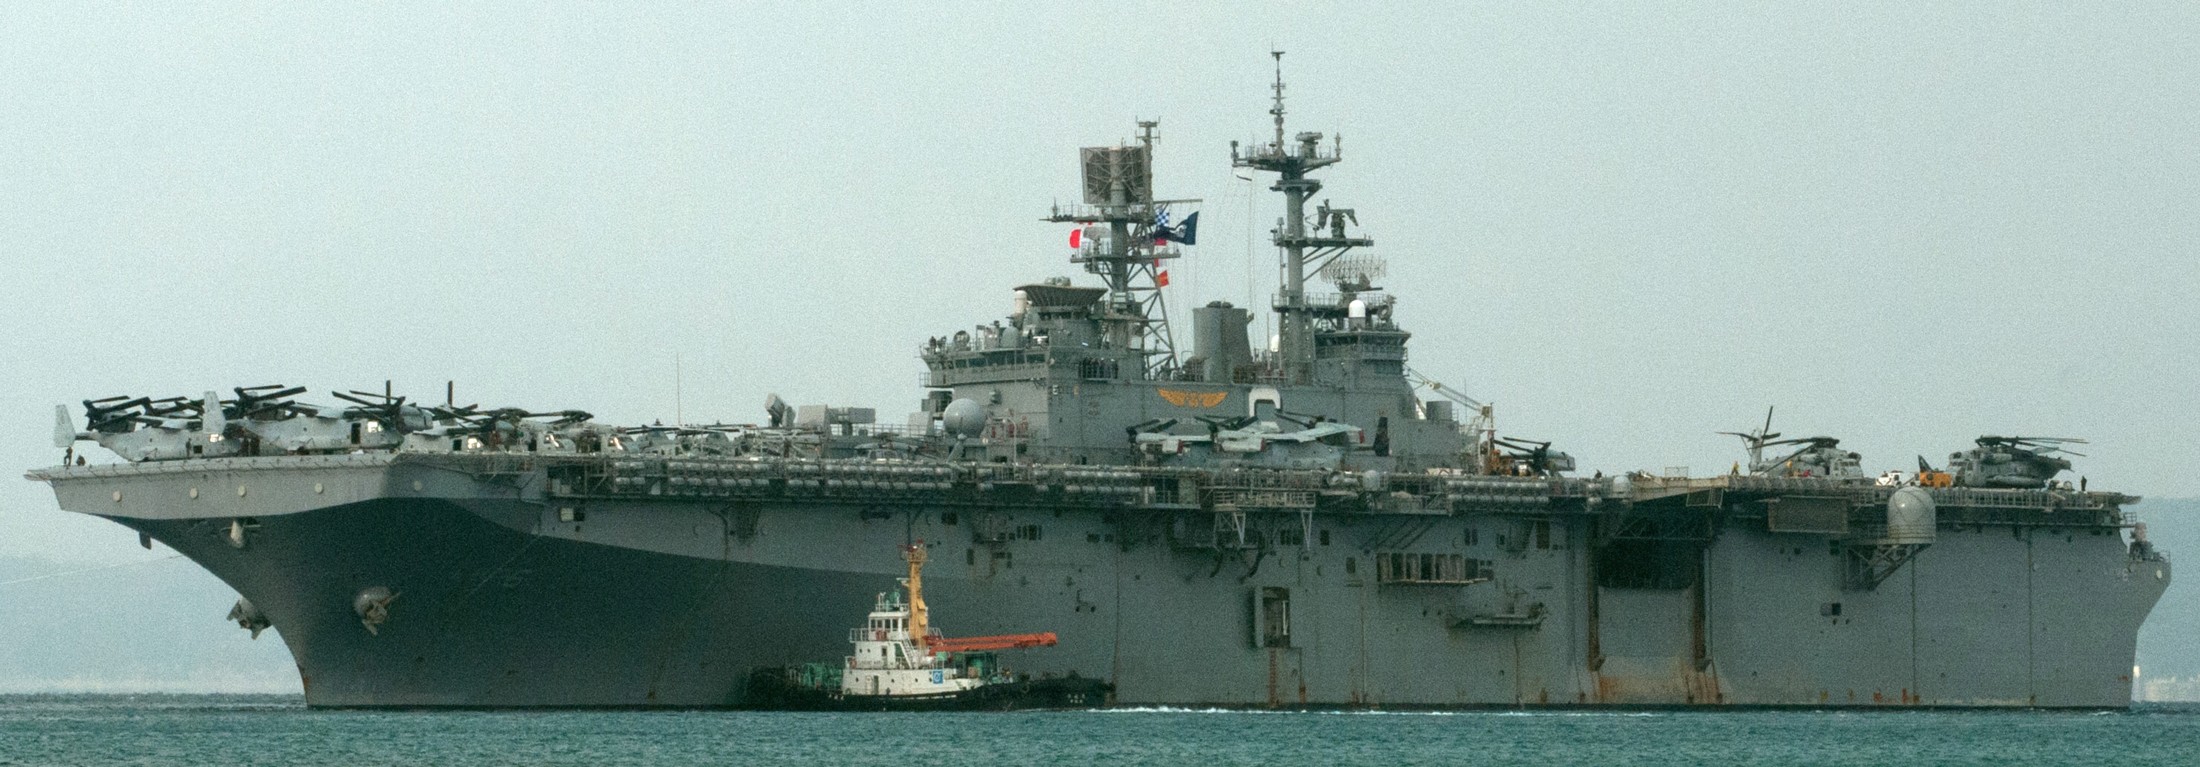 lhd-6 uss bonhomme richard amphibious assault ship landing helicopter dock wasp class us navy departing white beach okinawa 275